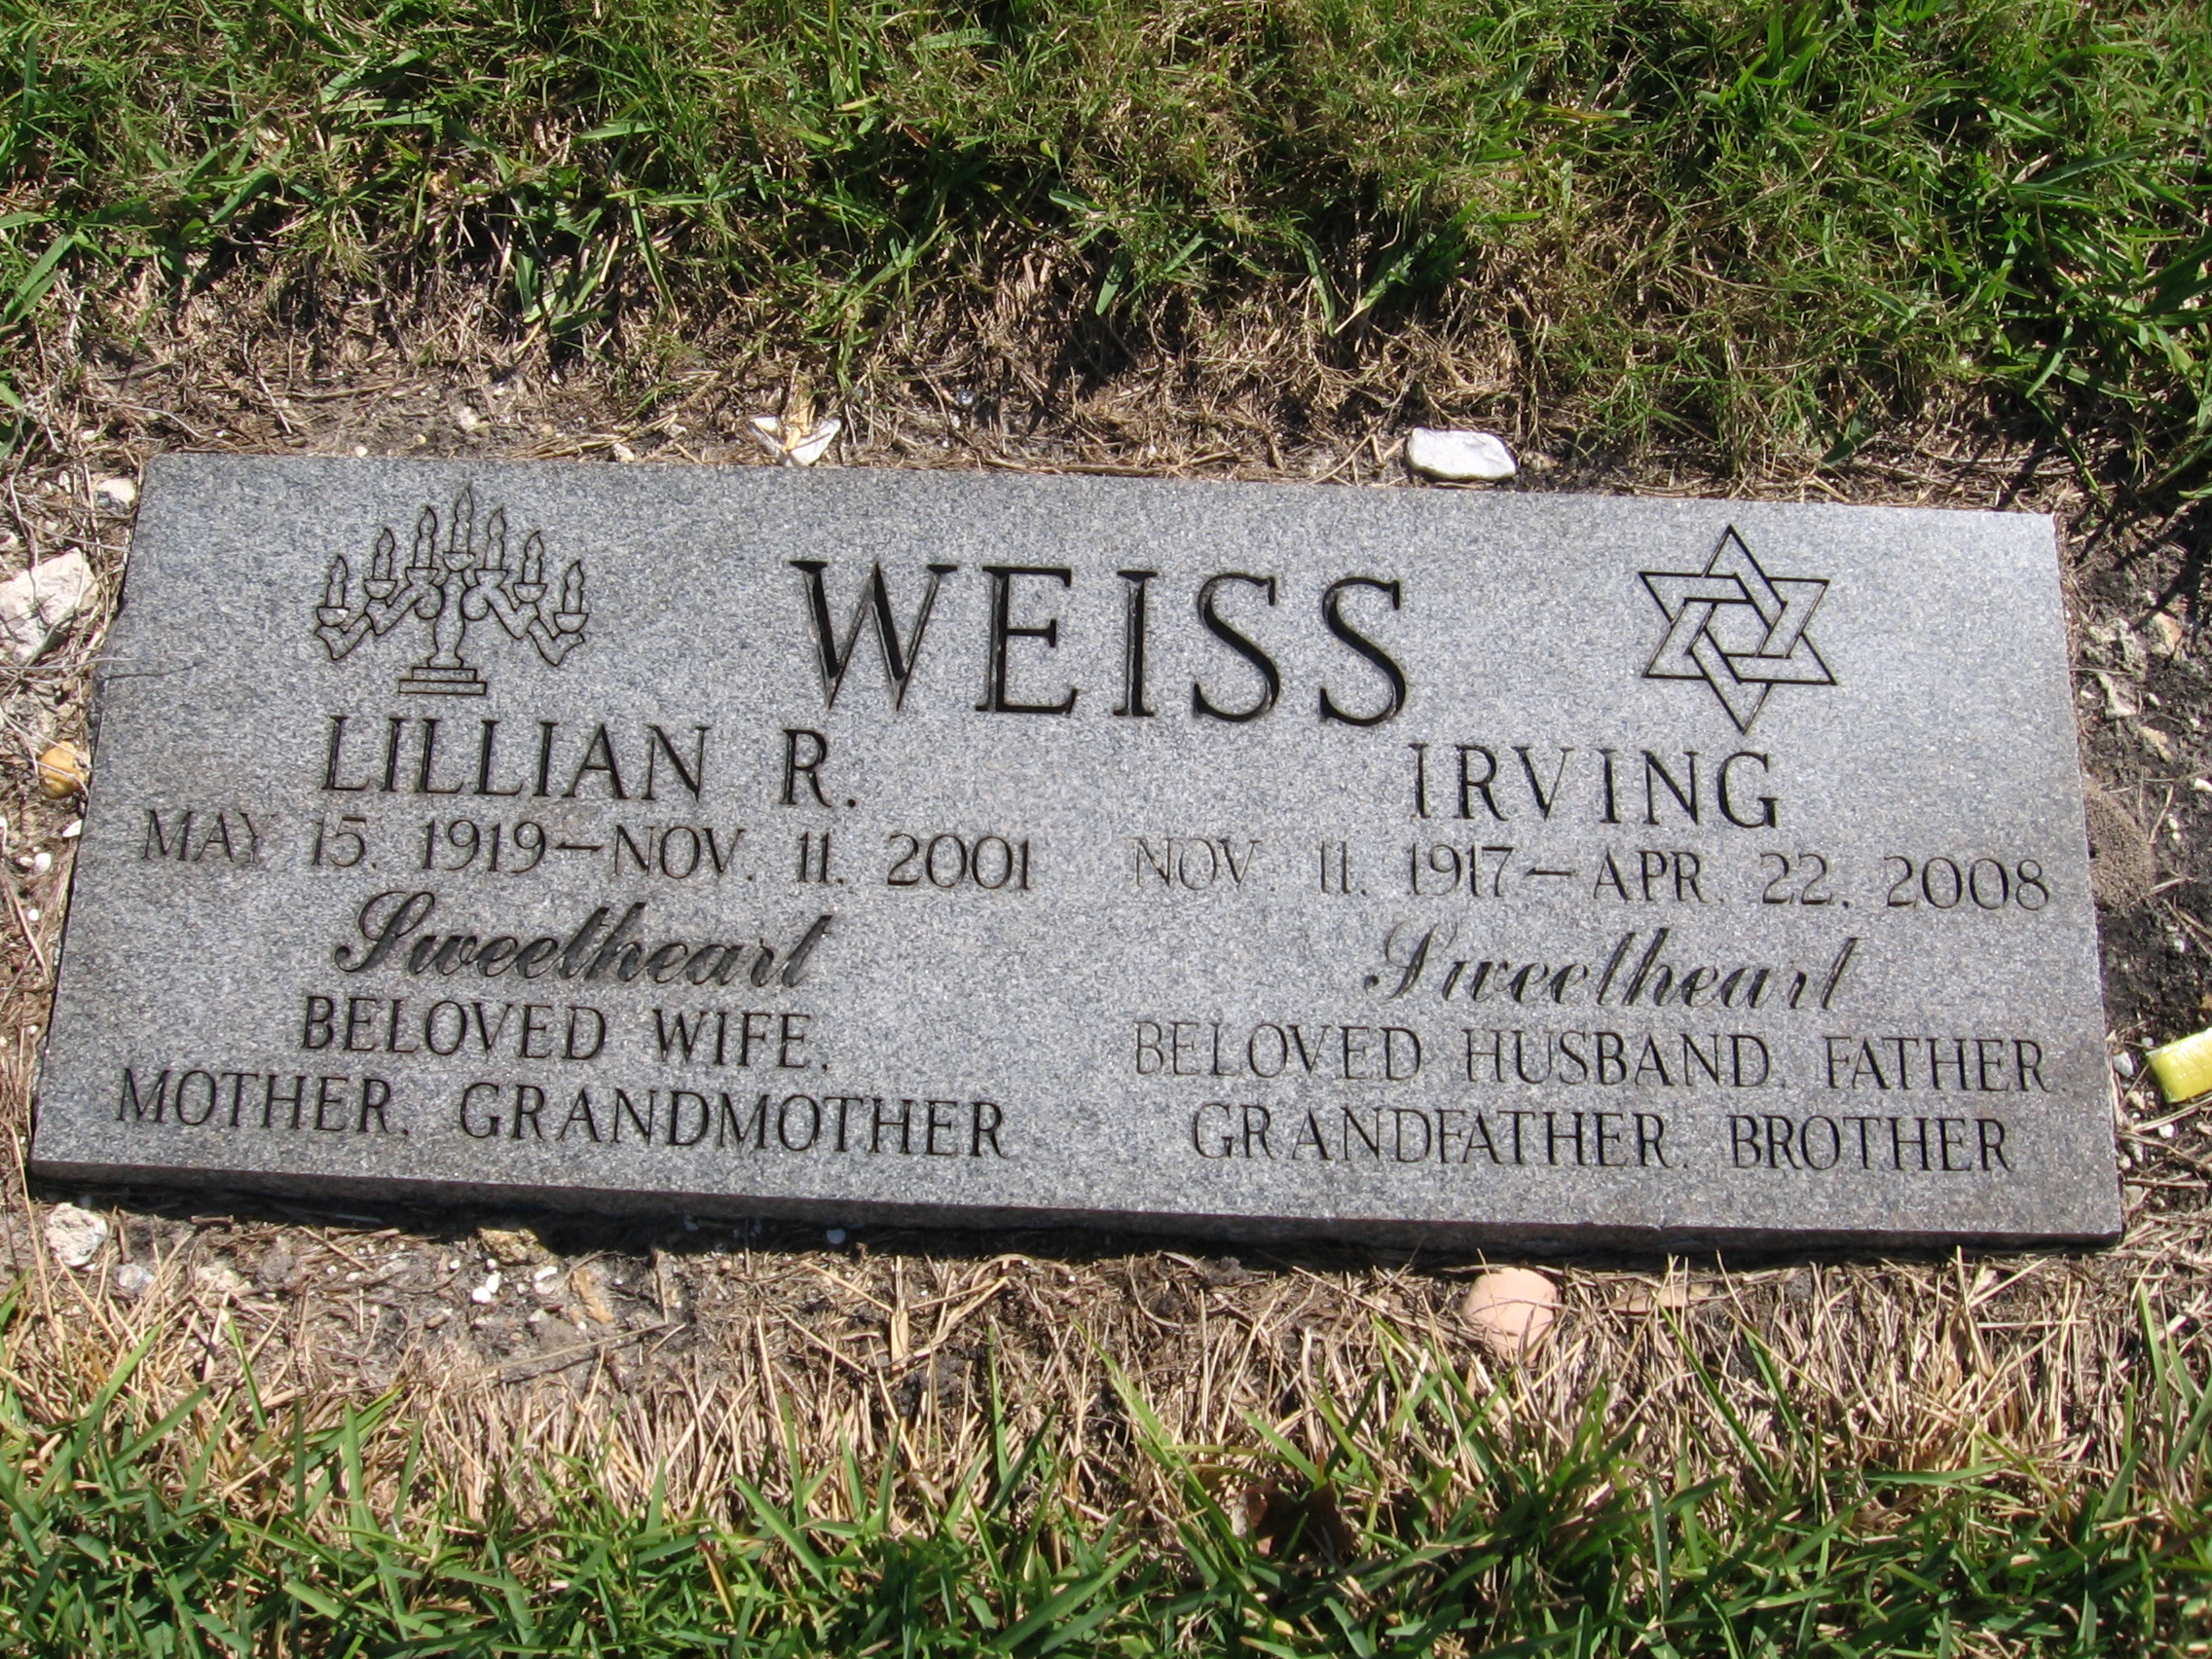 Irving Weiss